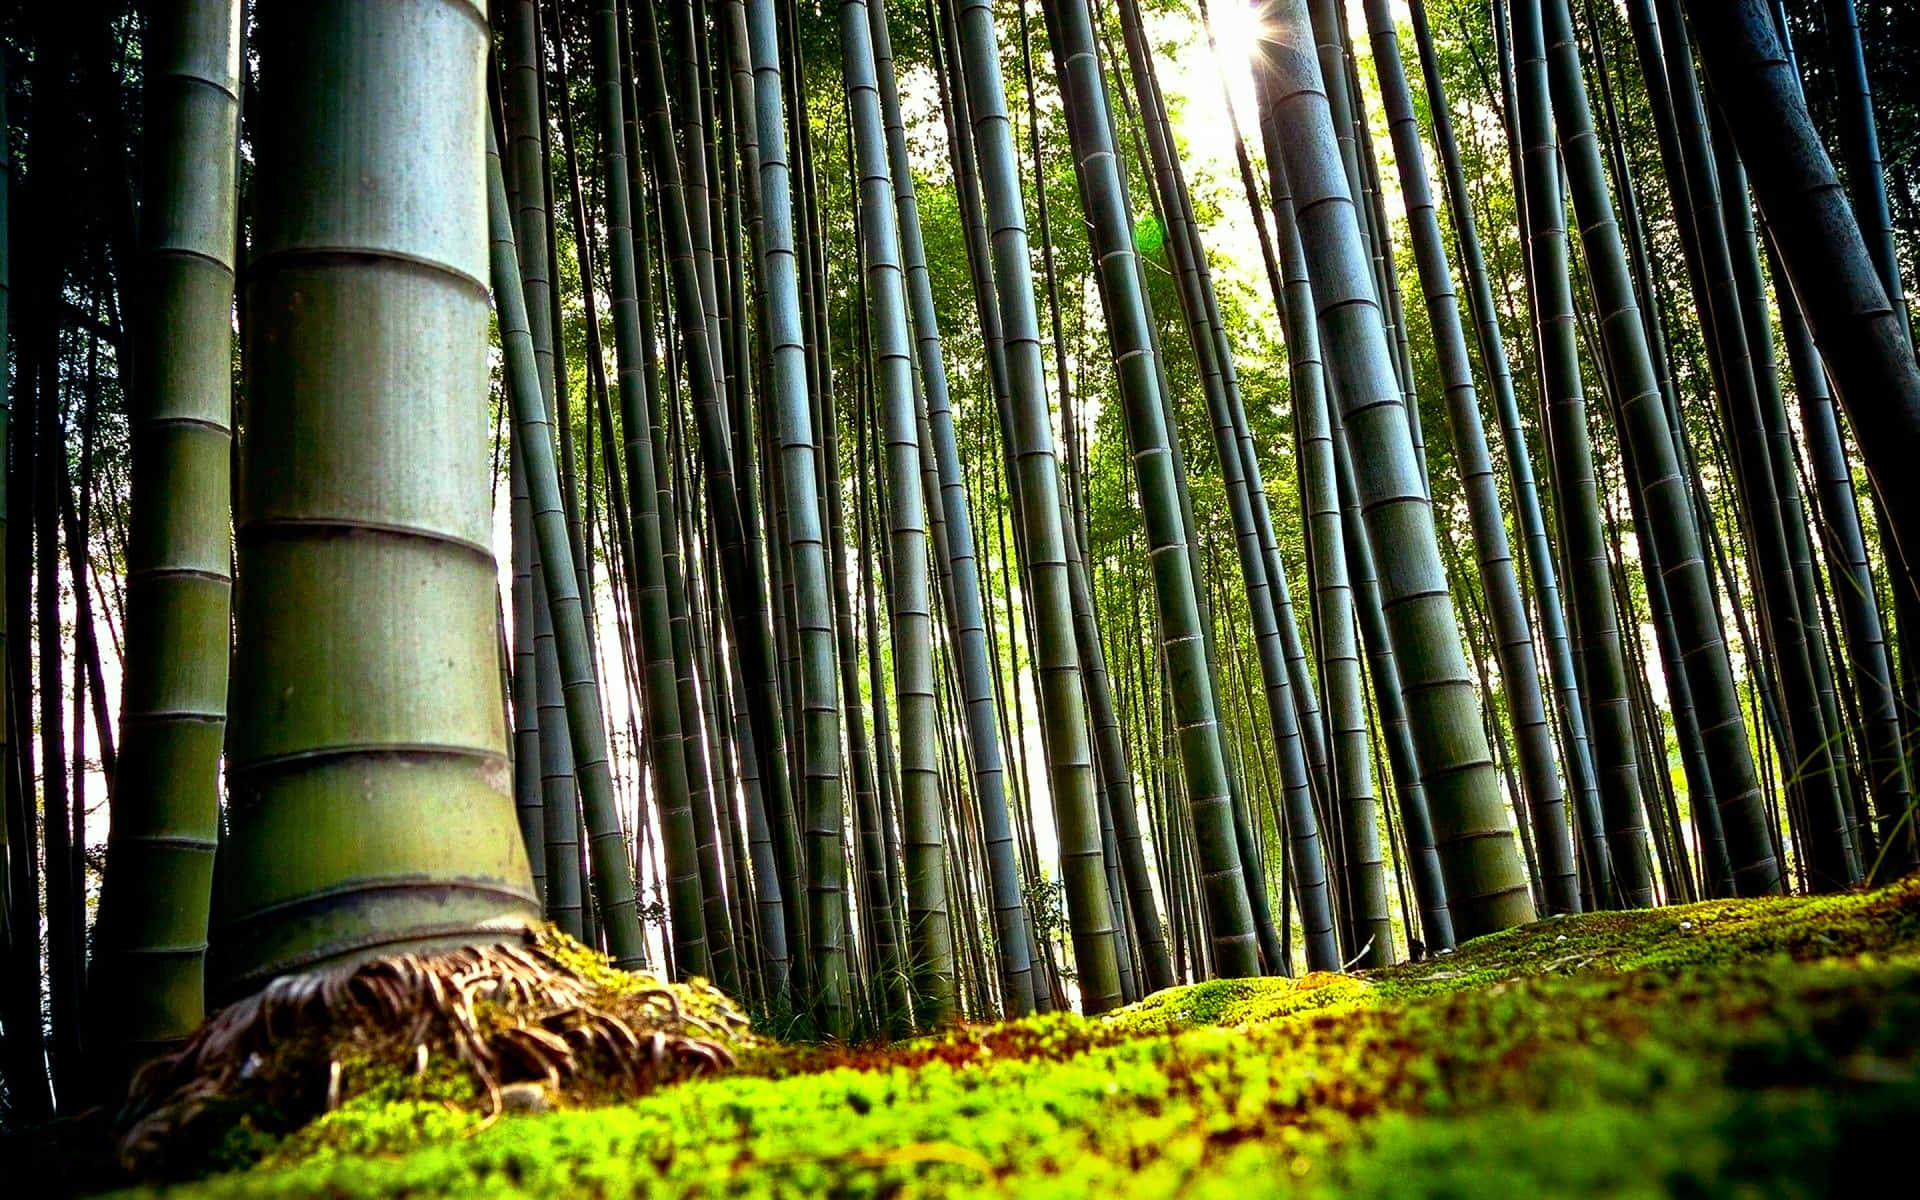 Unbosque De Bambú Con Árboles Altos Y Musgo Fondo de pantalla